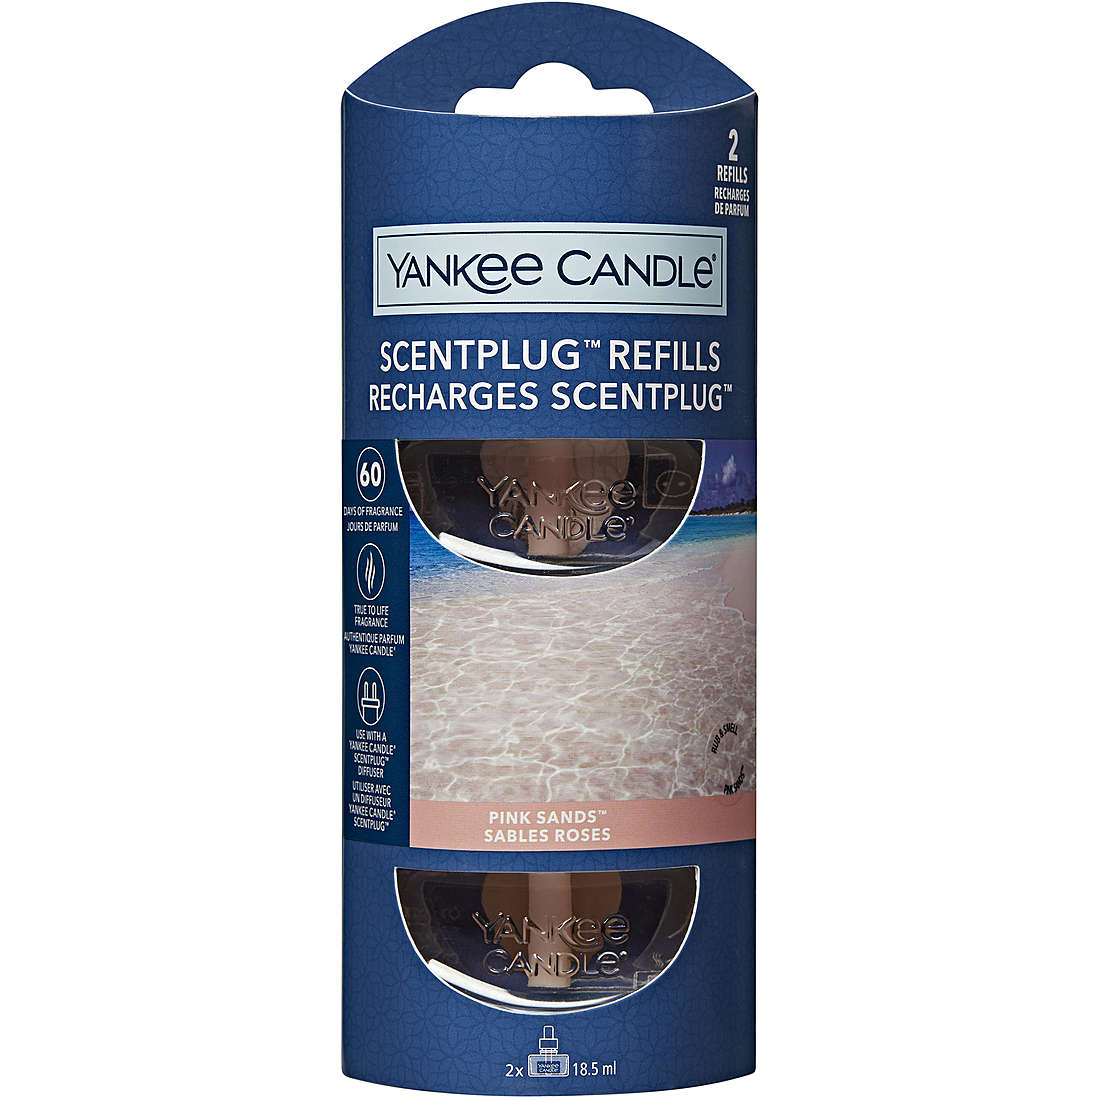 PINK SANDS -Yankee Candle- Ricarica Refill per Diffusore Elettrico ScentPlug